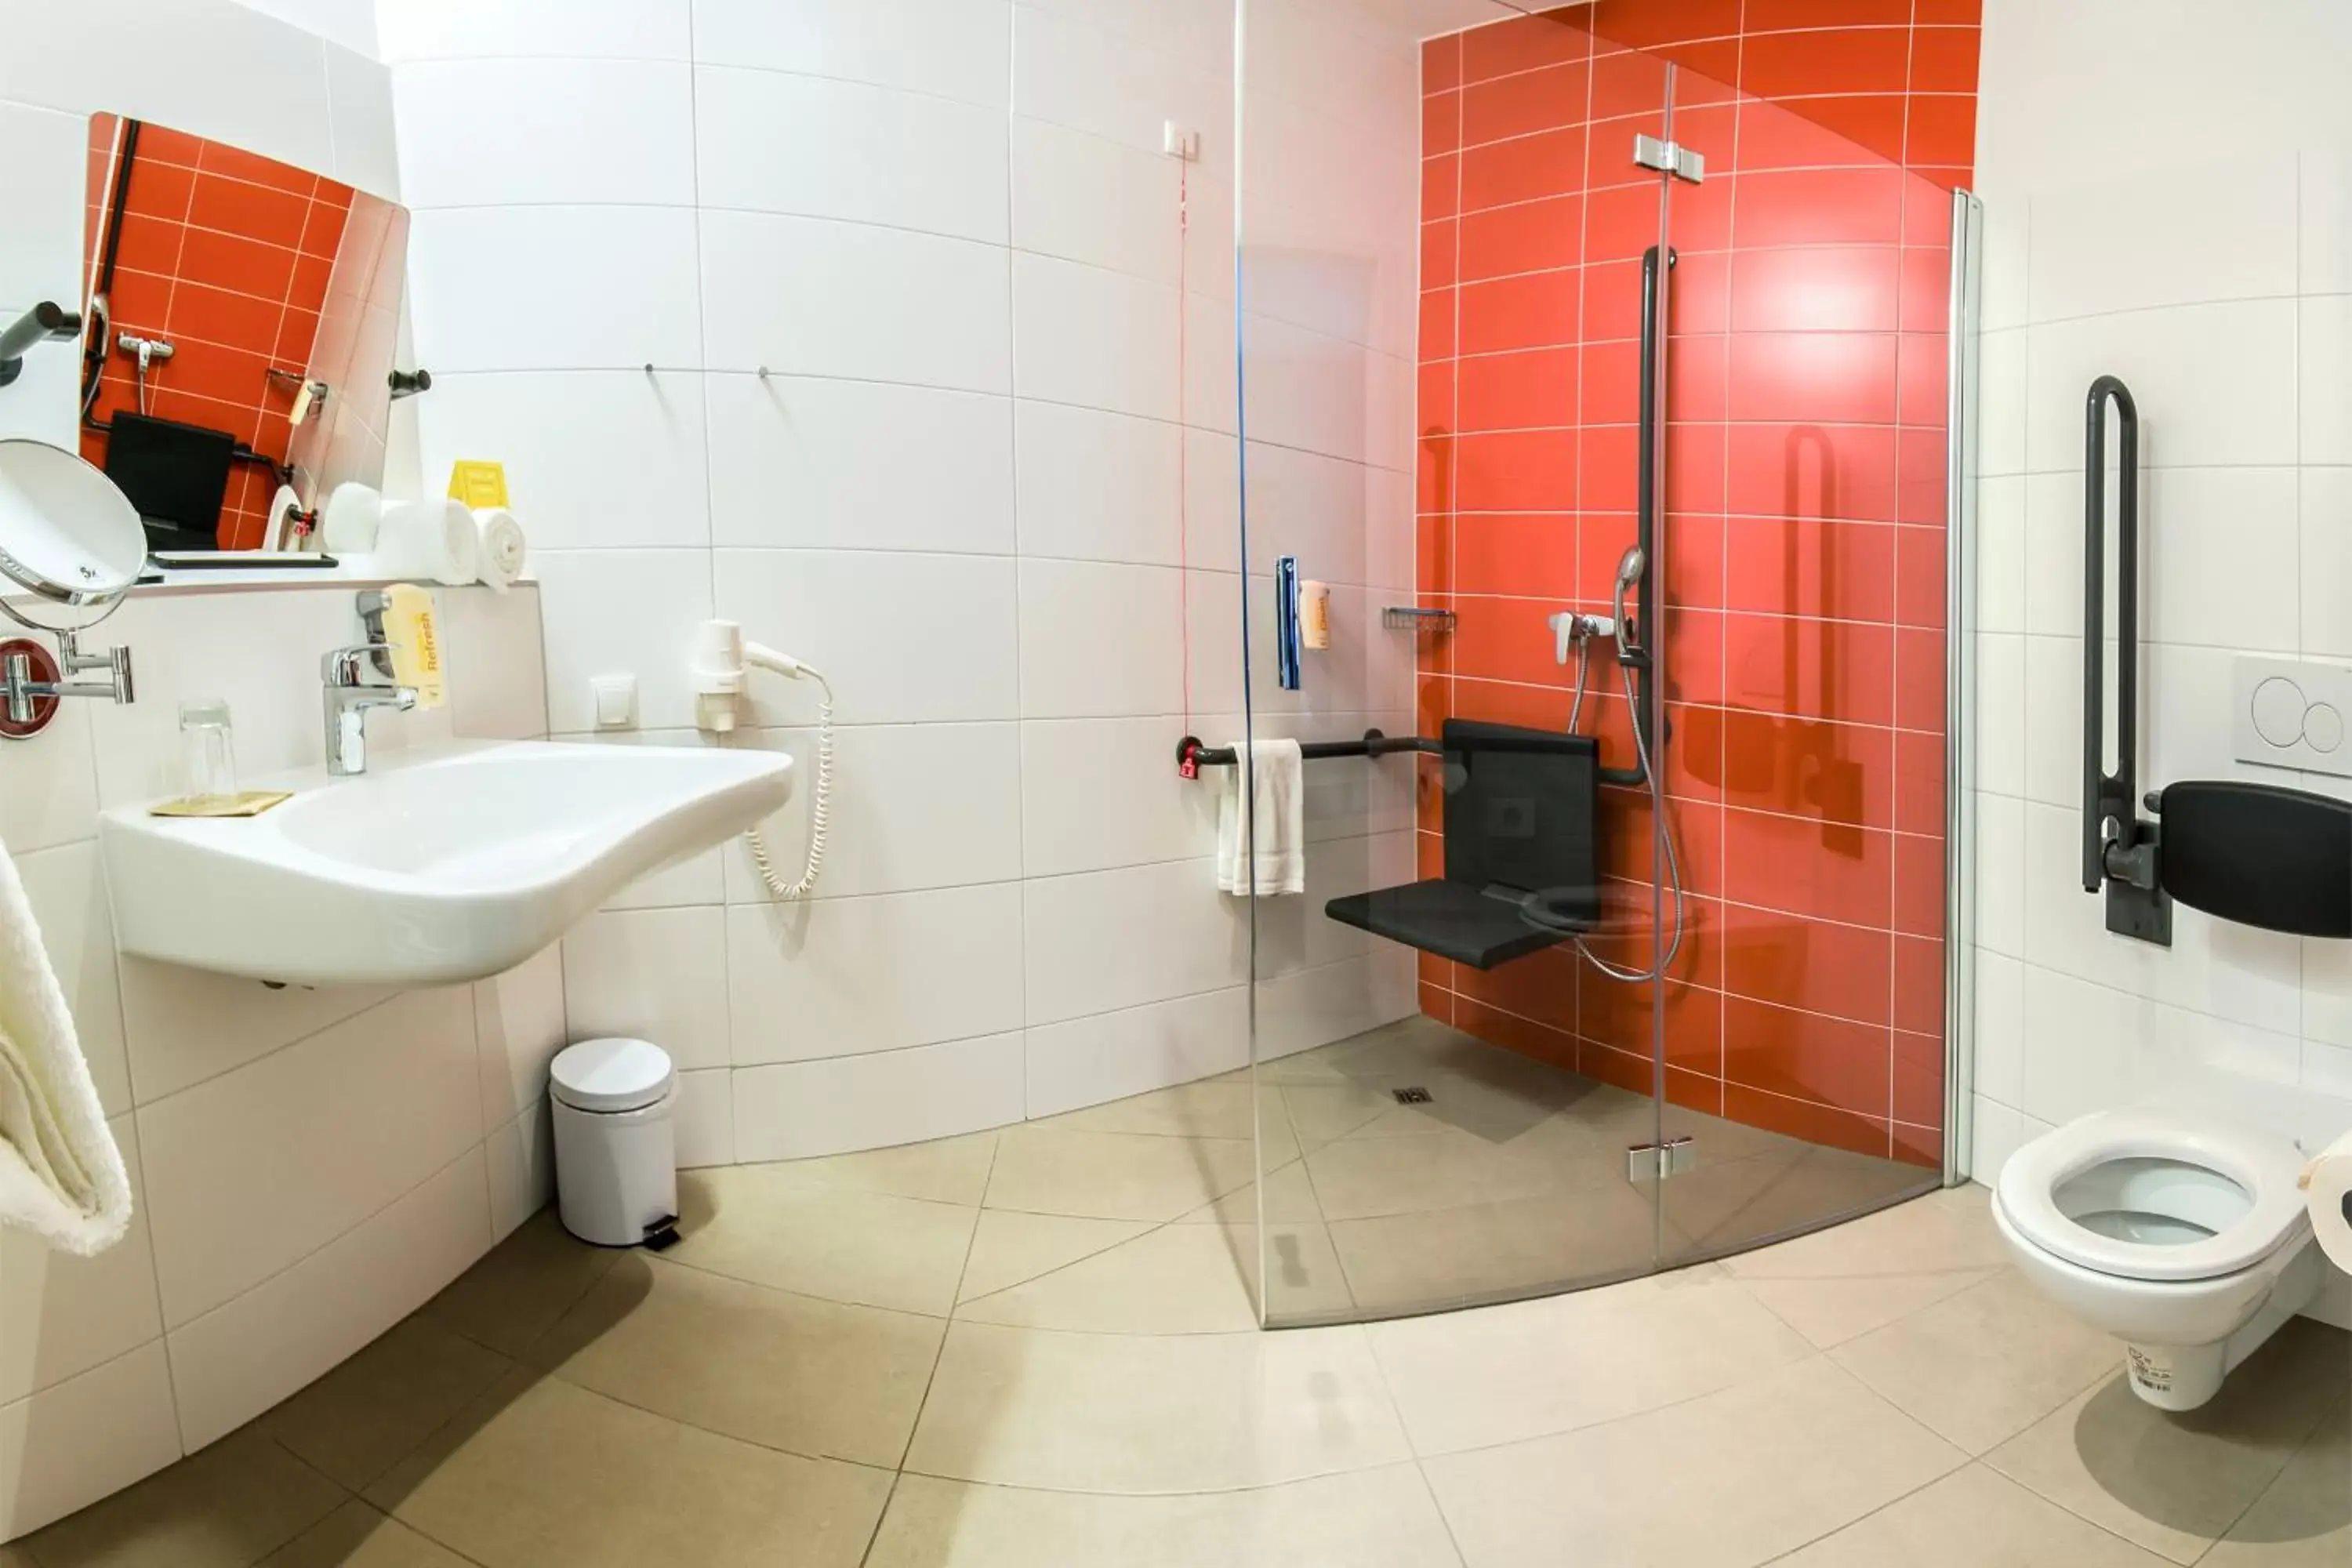 Facility for disabled guests, Bathroom in JUFA Hotel Königswinter/Bonn